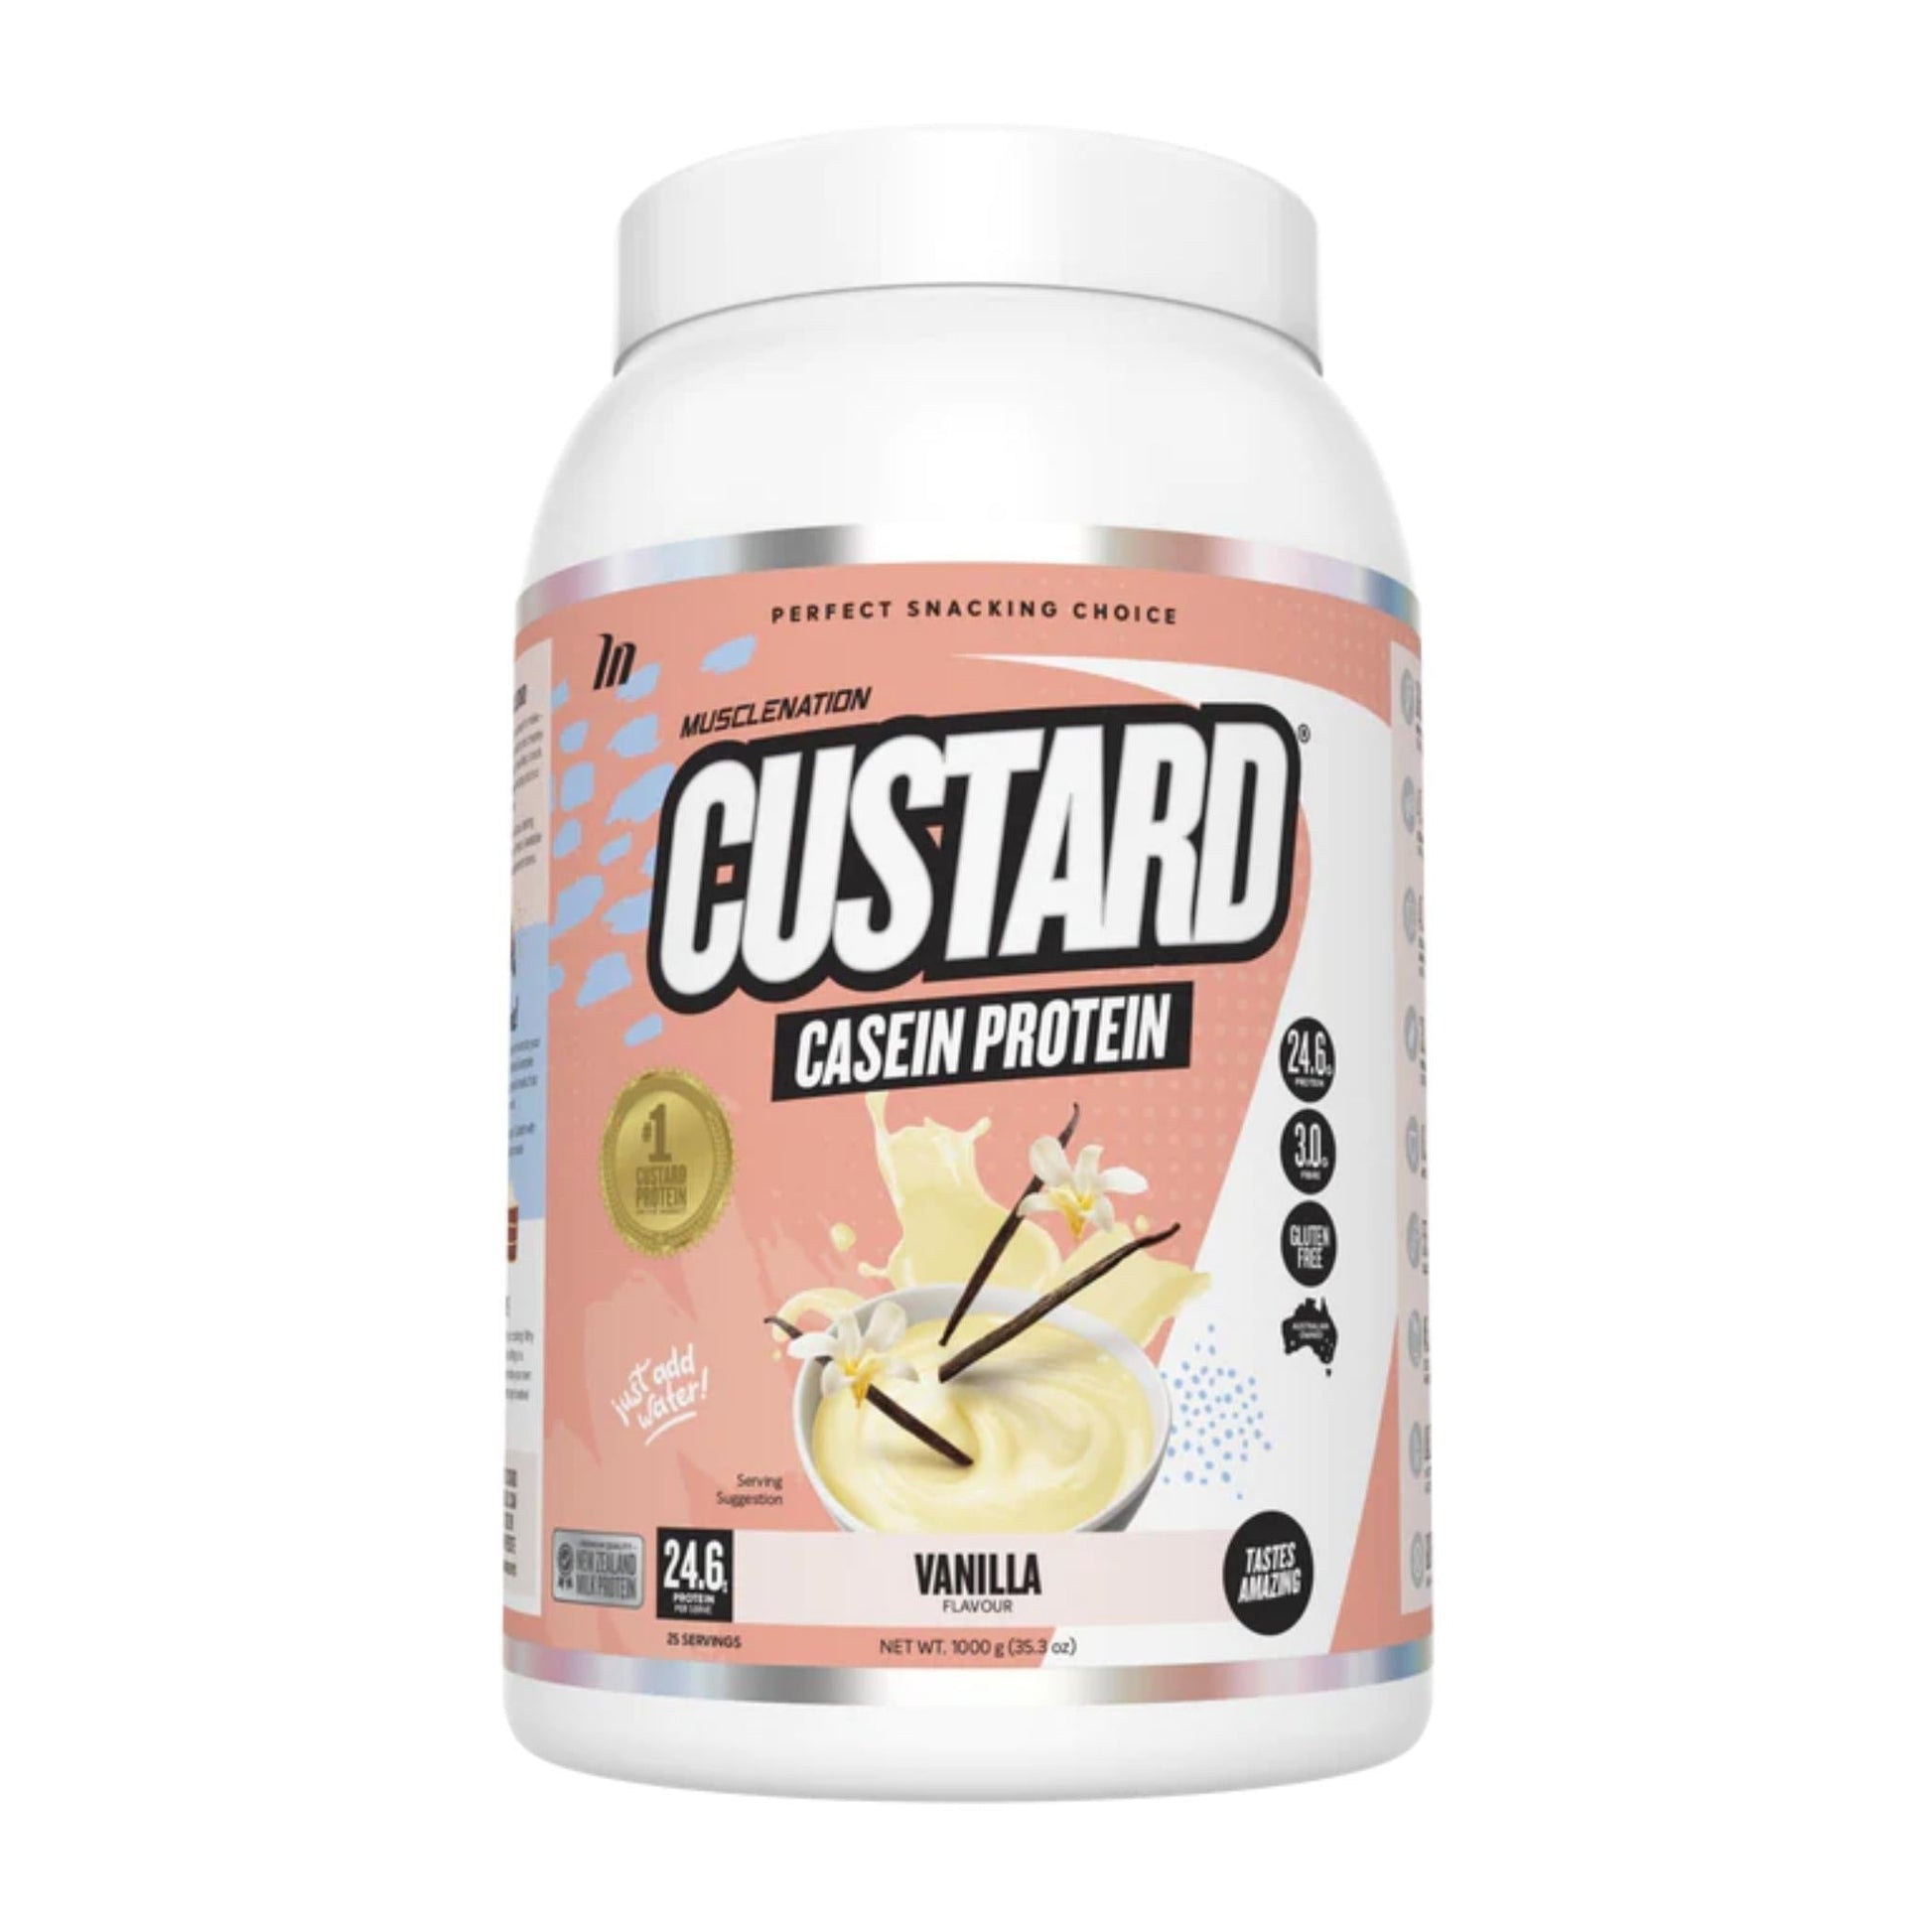 Muscle Nation - Custard Casein Protein - Supplements - Vanilla - The Cave Gym